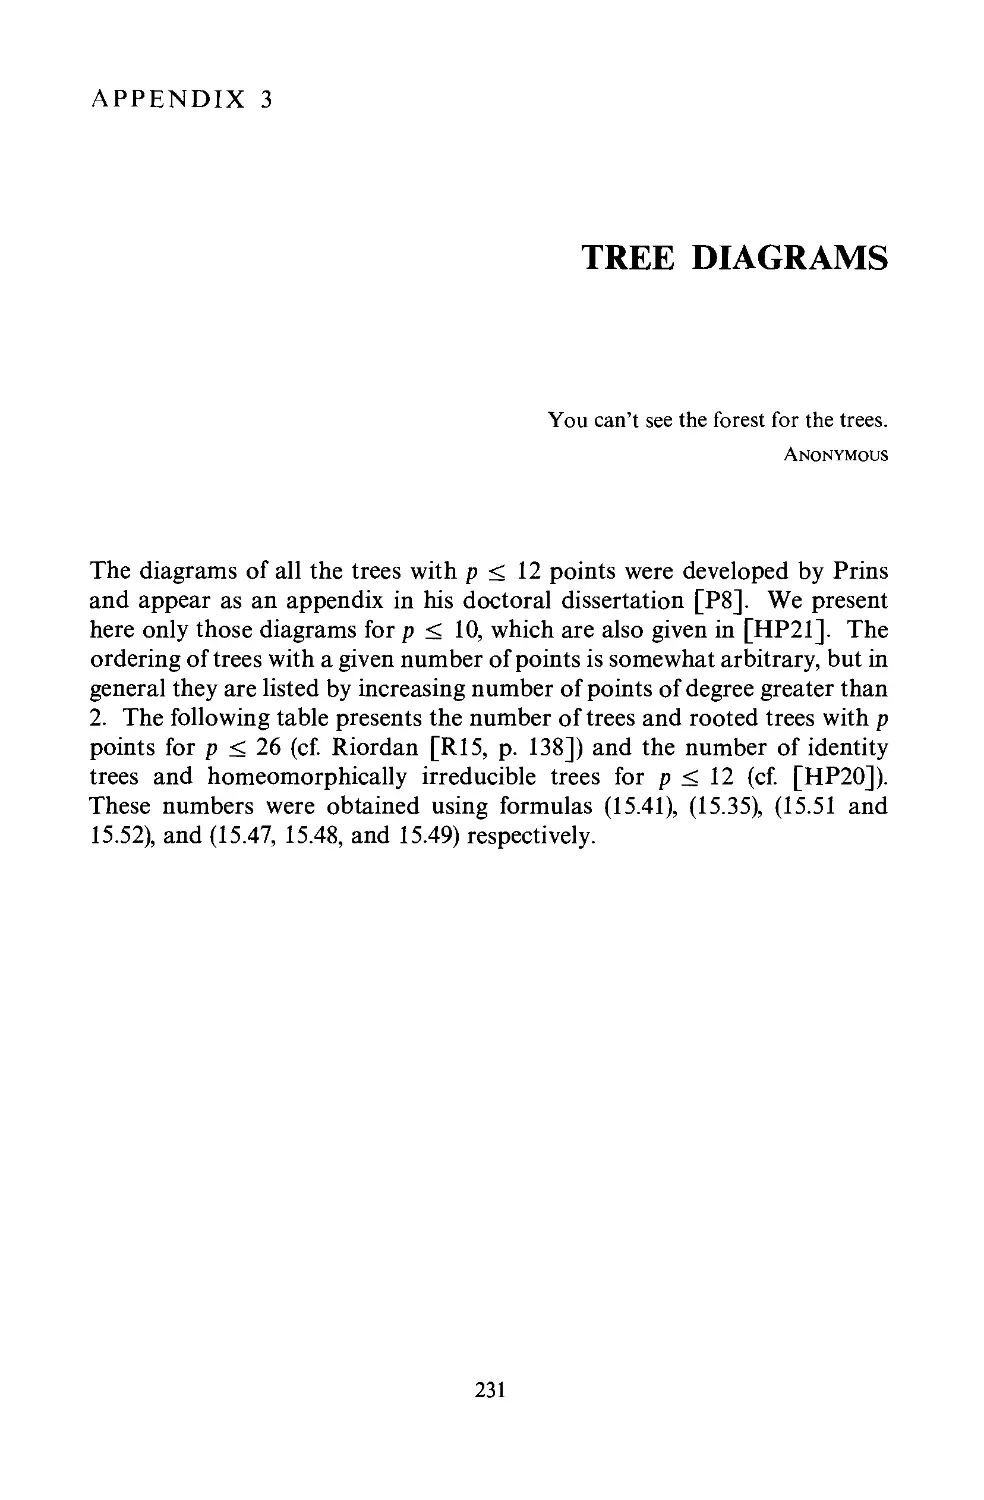 Appendix III Tree Diagrams